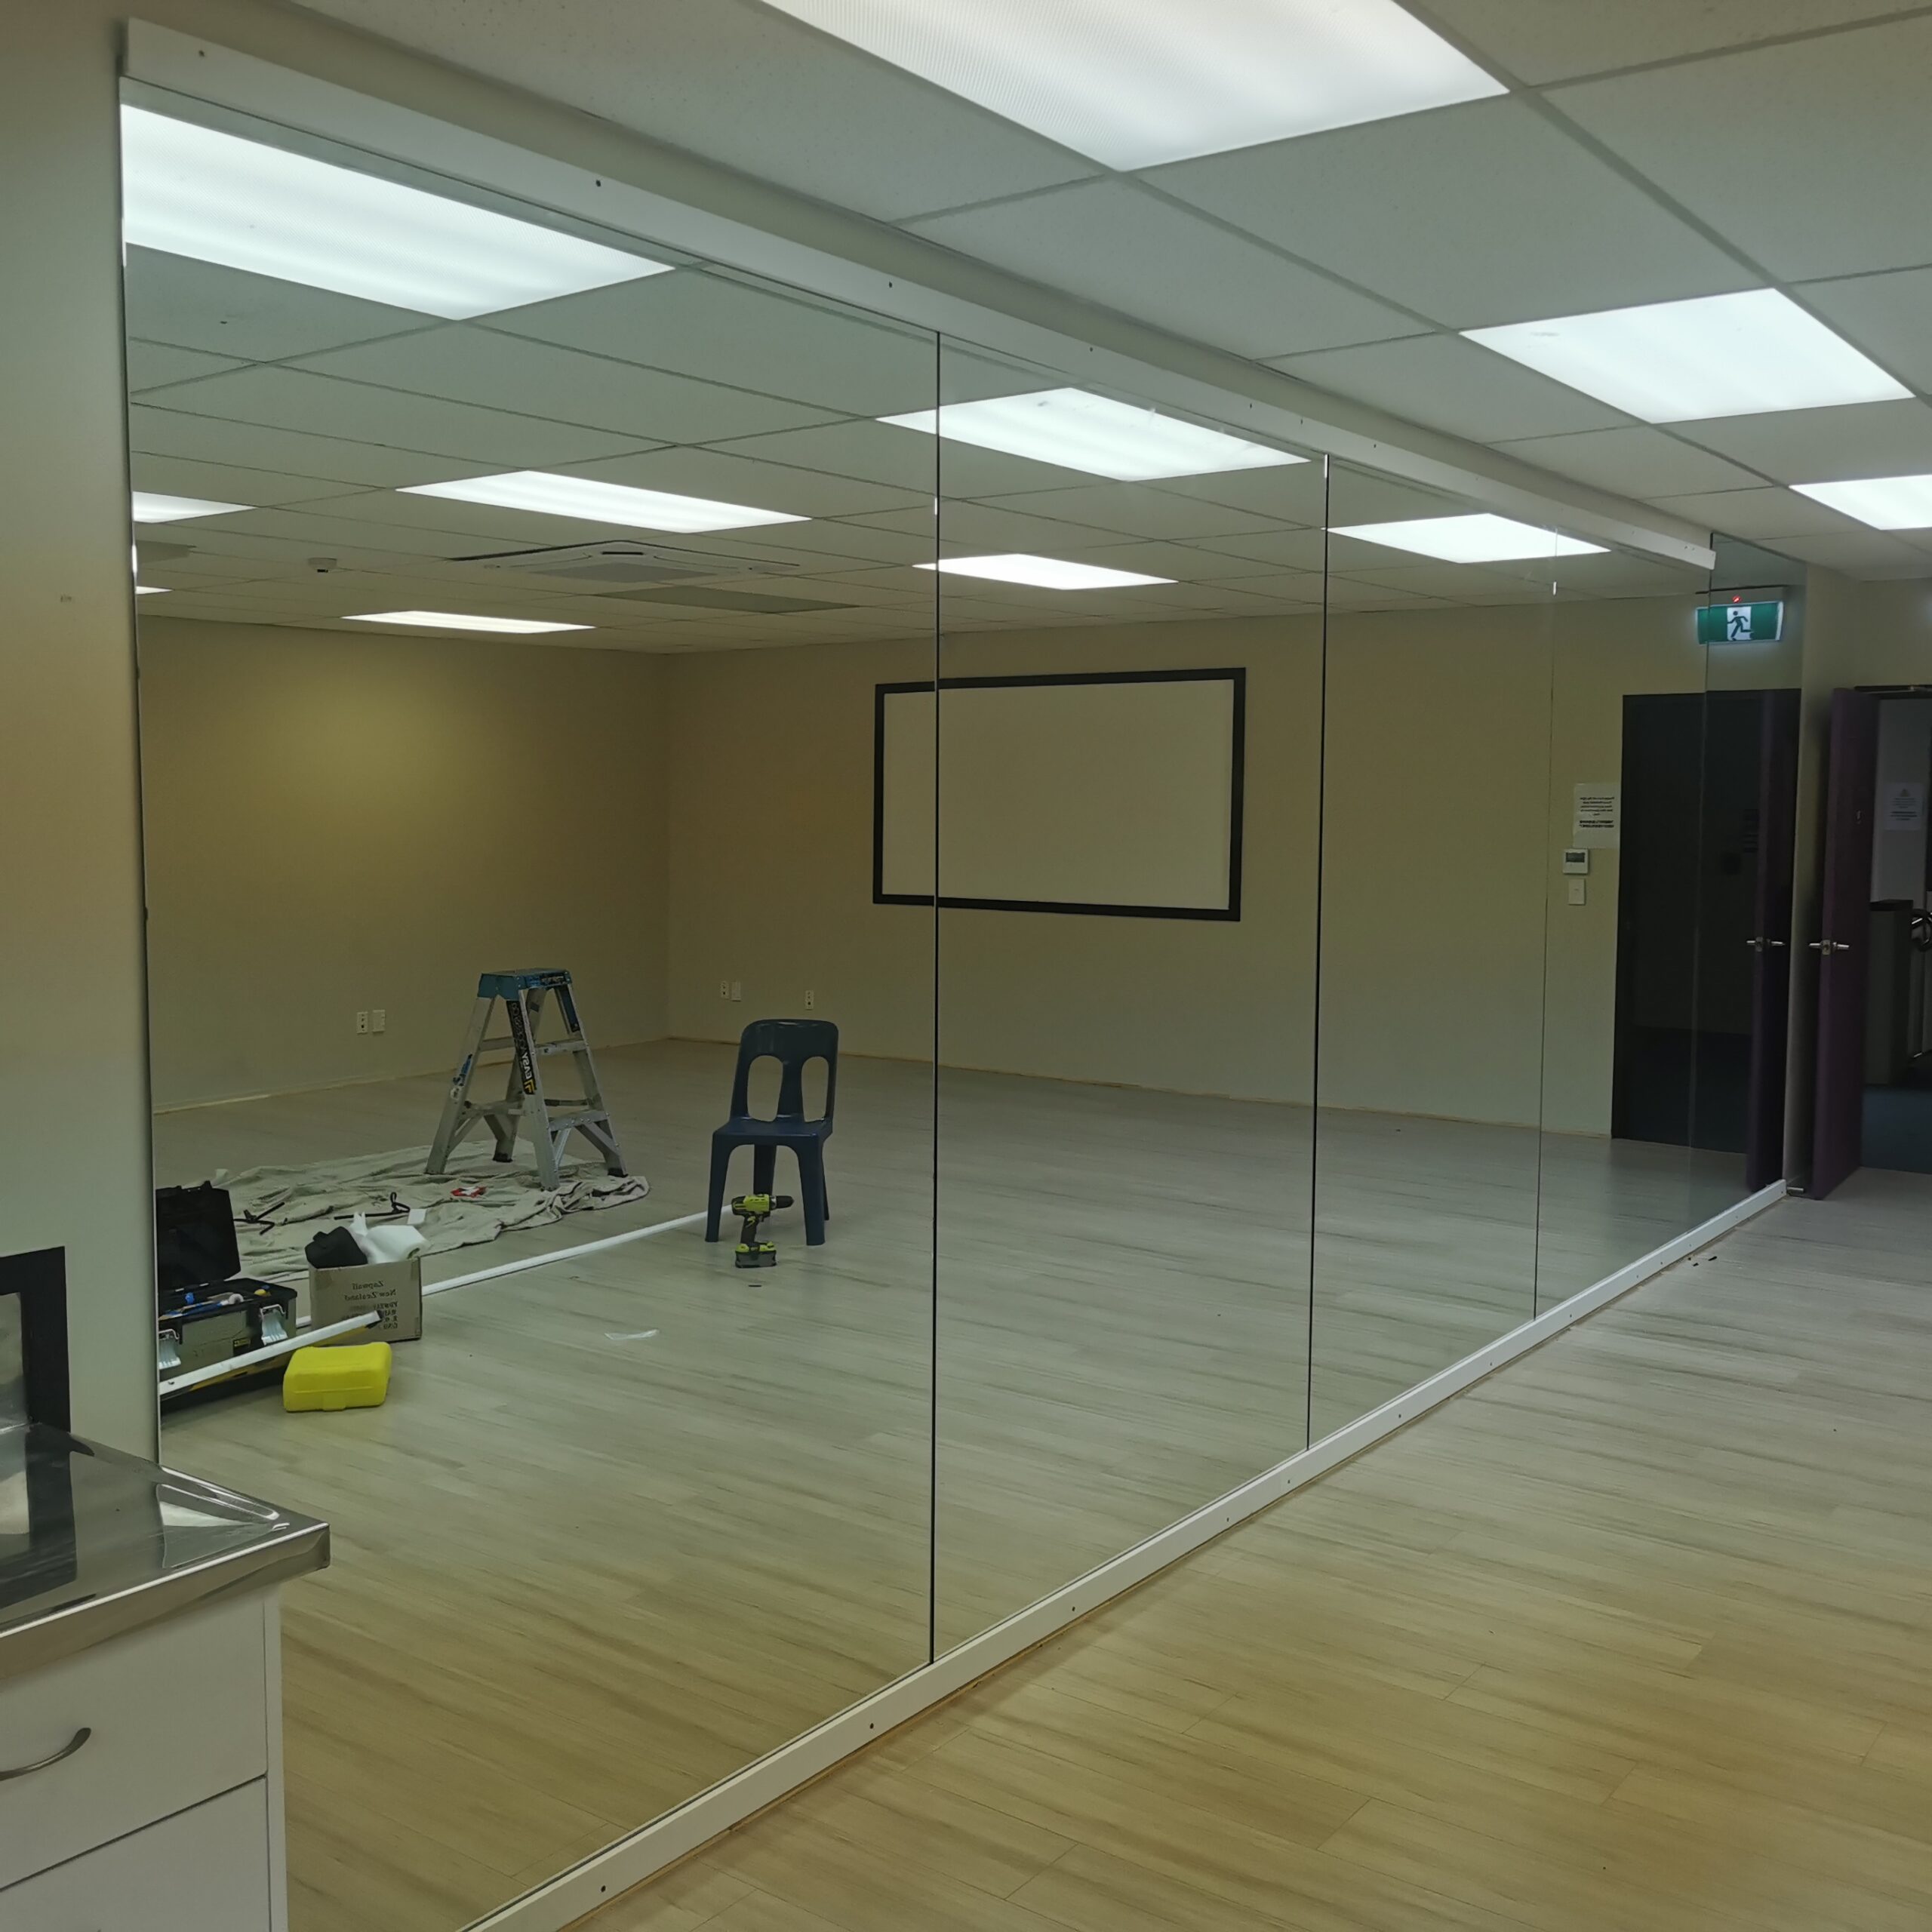 We install your designed Dance Studio mirrors